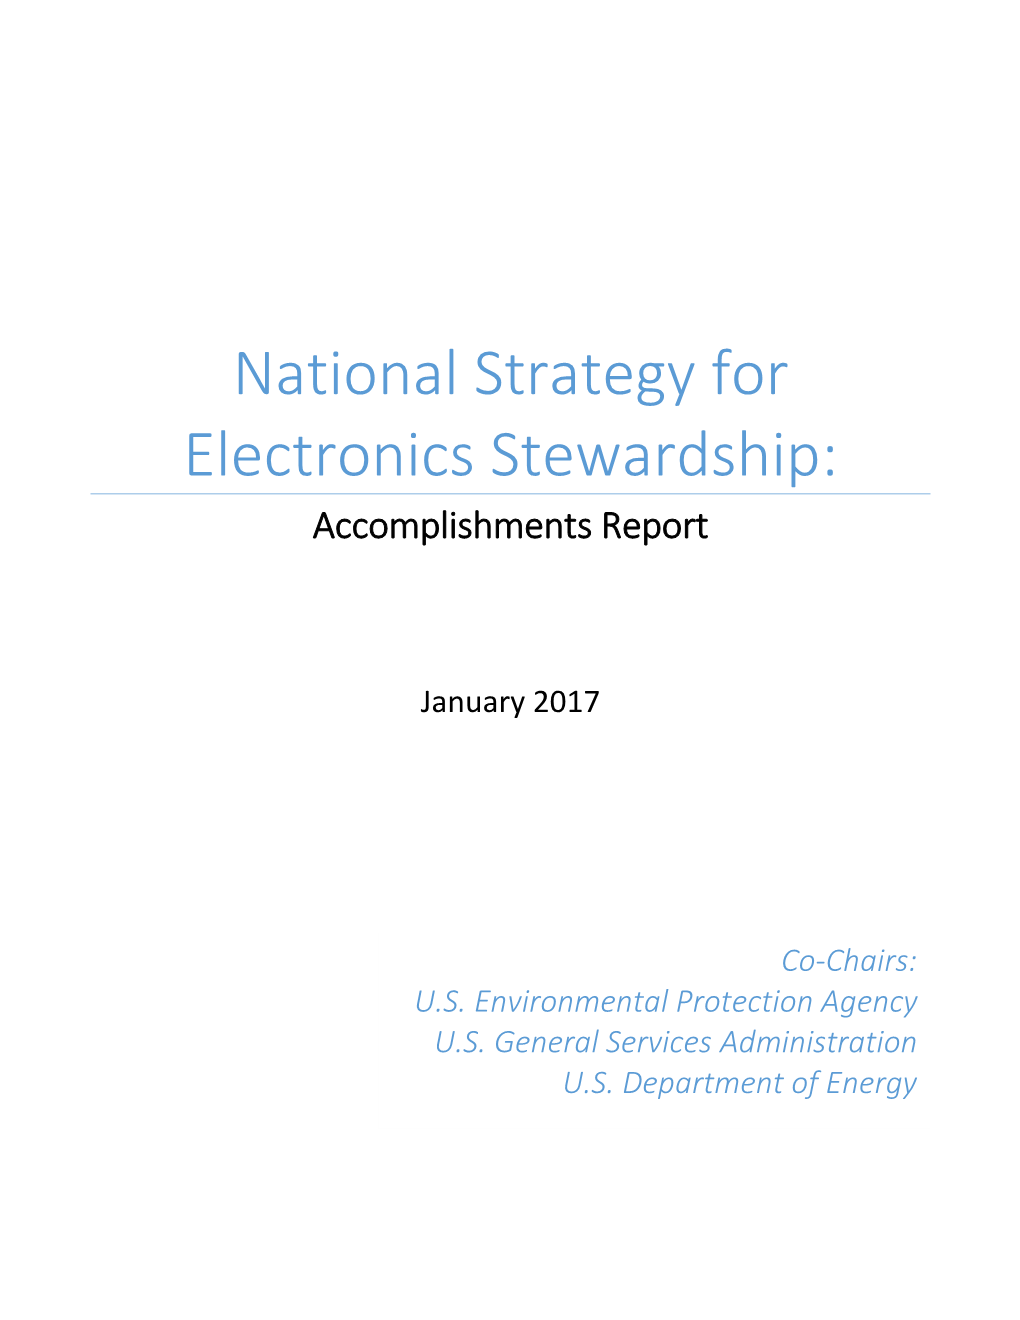 National Strategy for Electronics Stewardship: Accomplishments Report